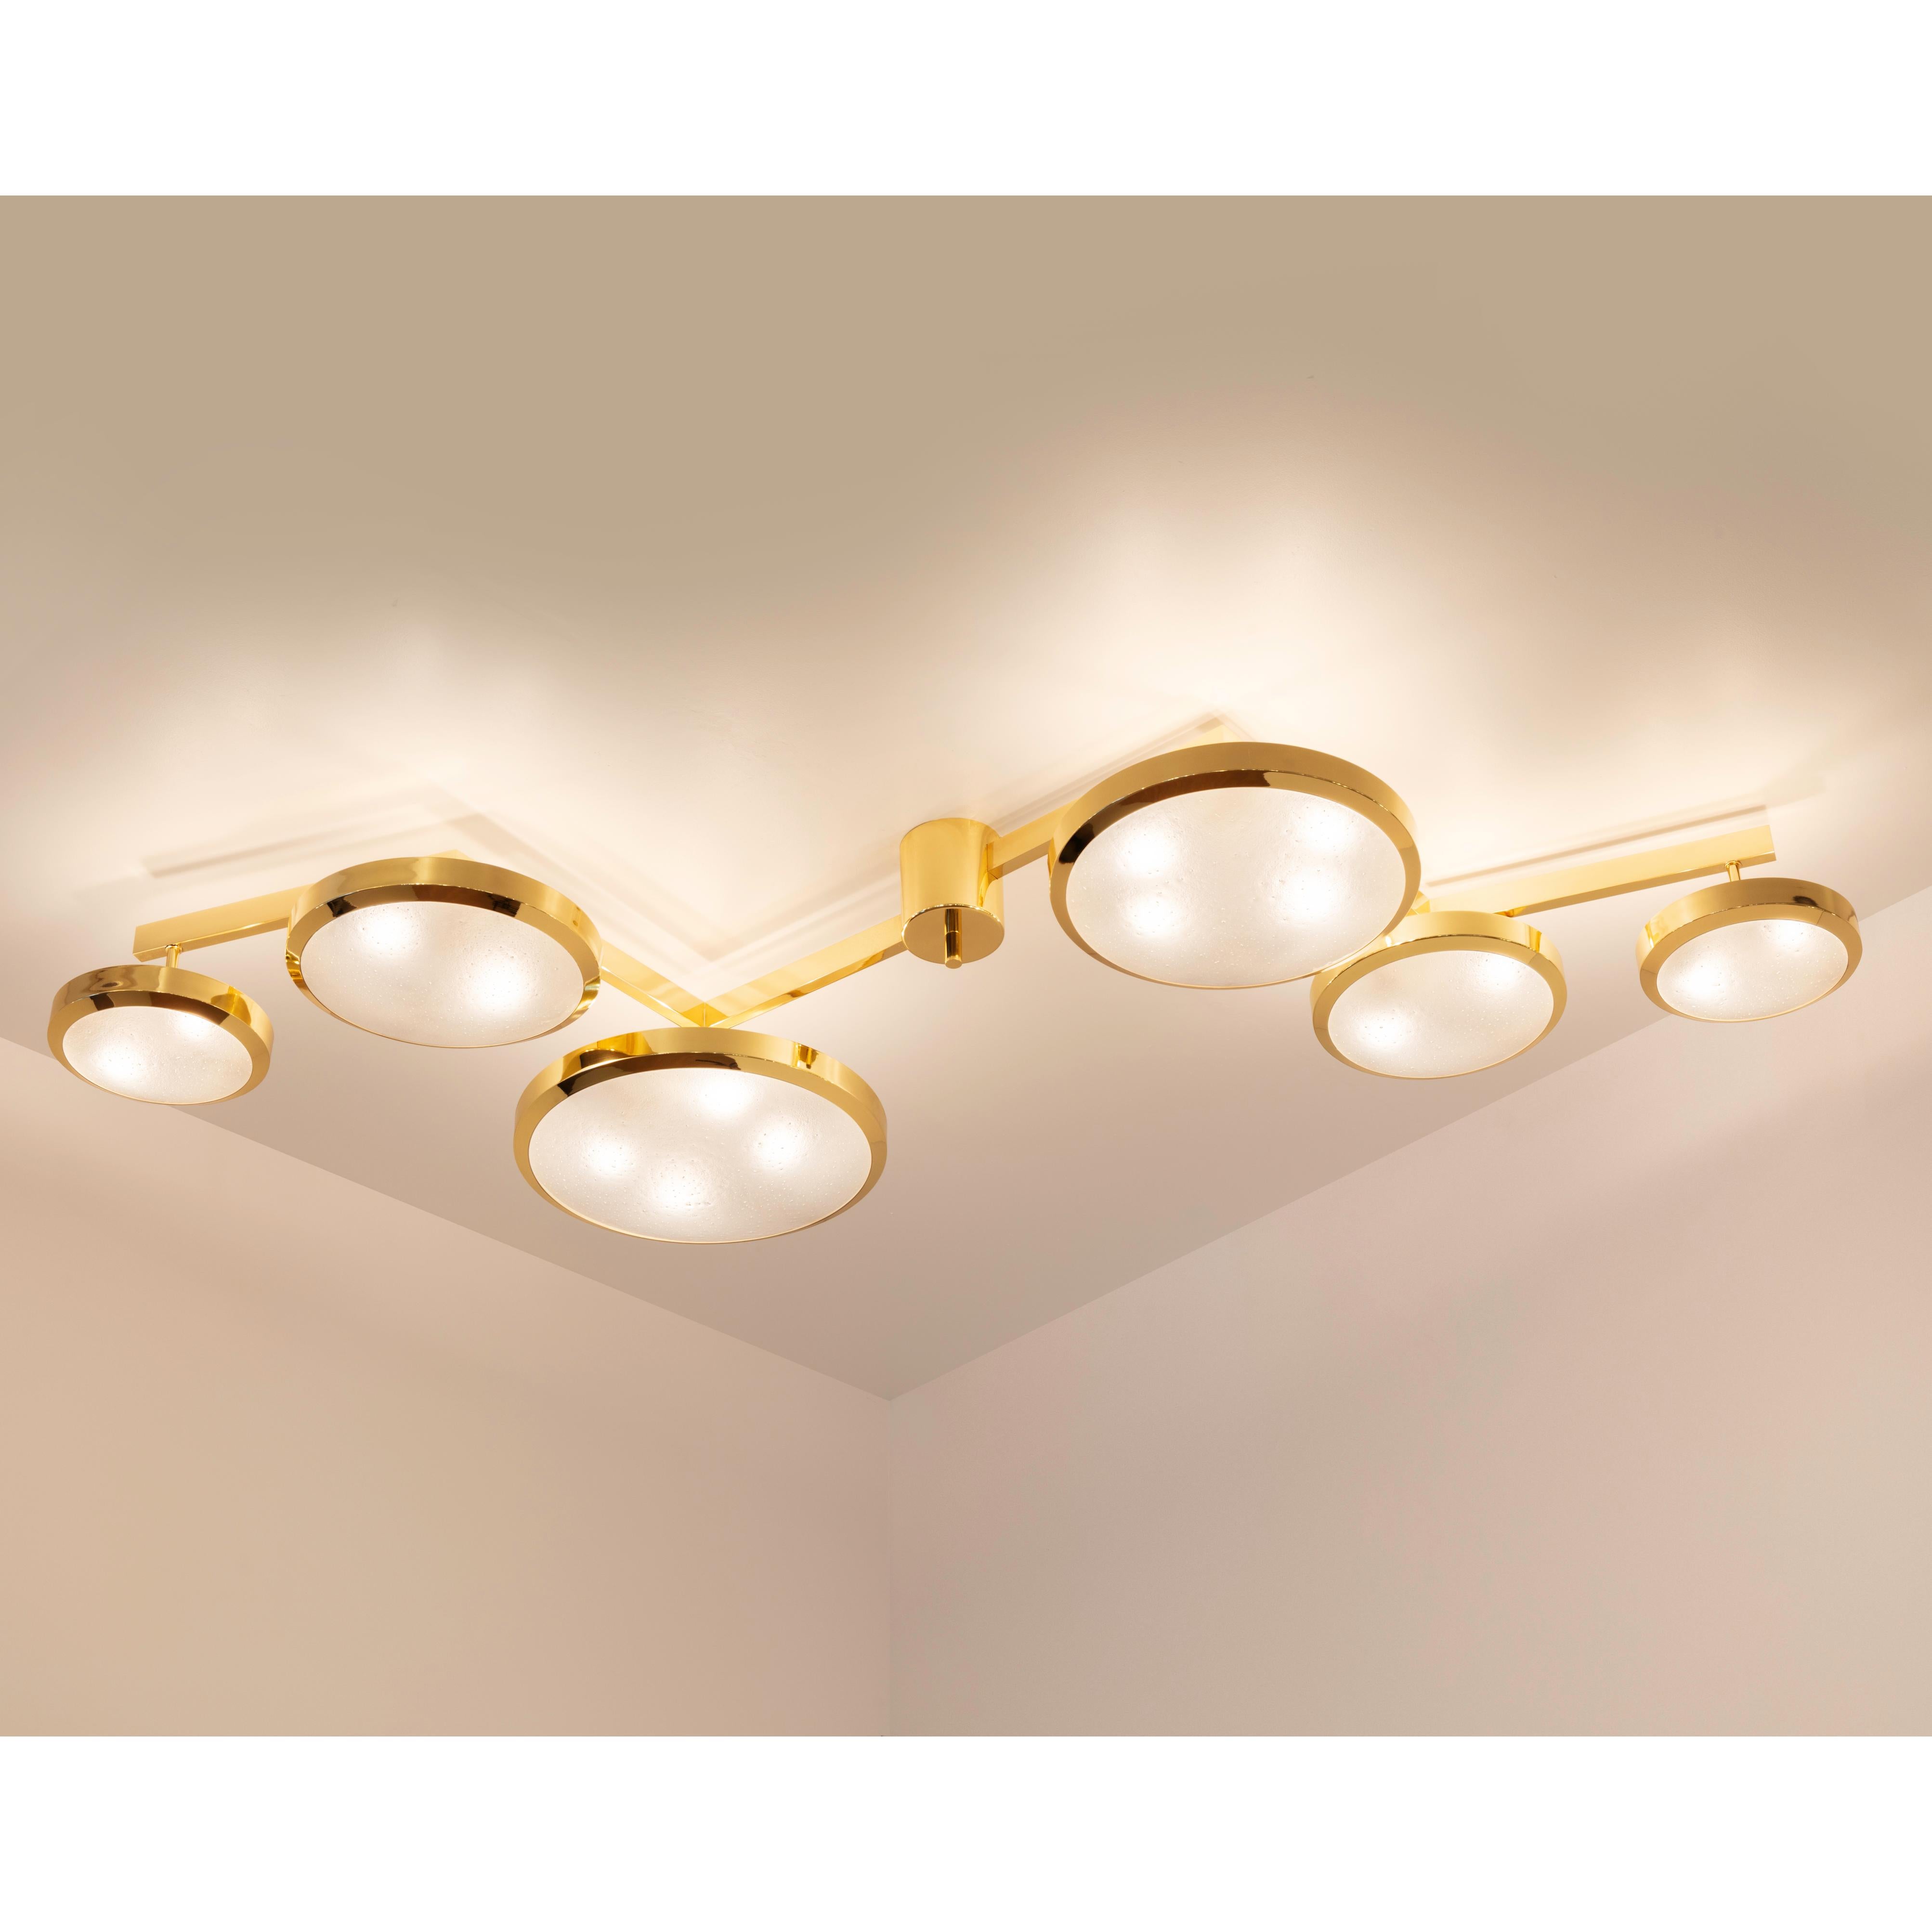 Italian Geometria Sospesa Ceiling Light by Gaspare Asaro - Polished Brass For Sale